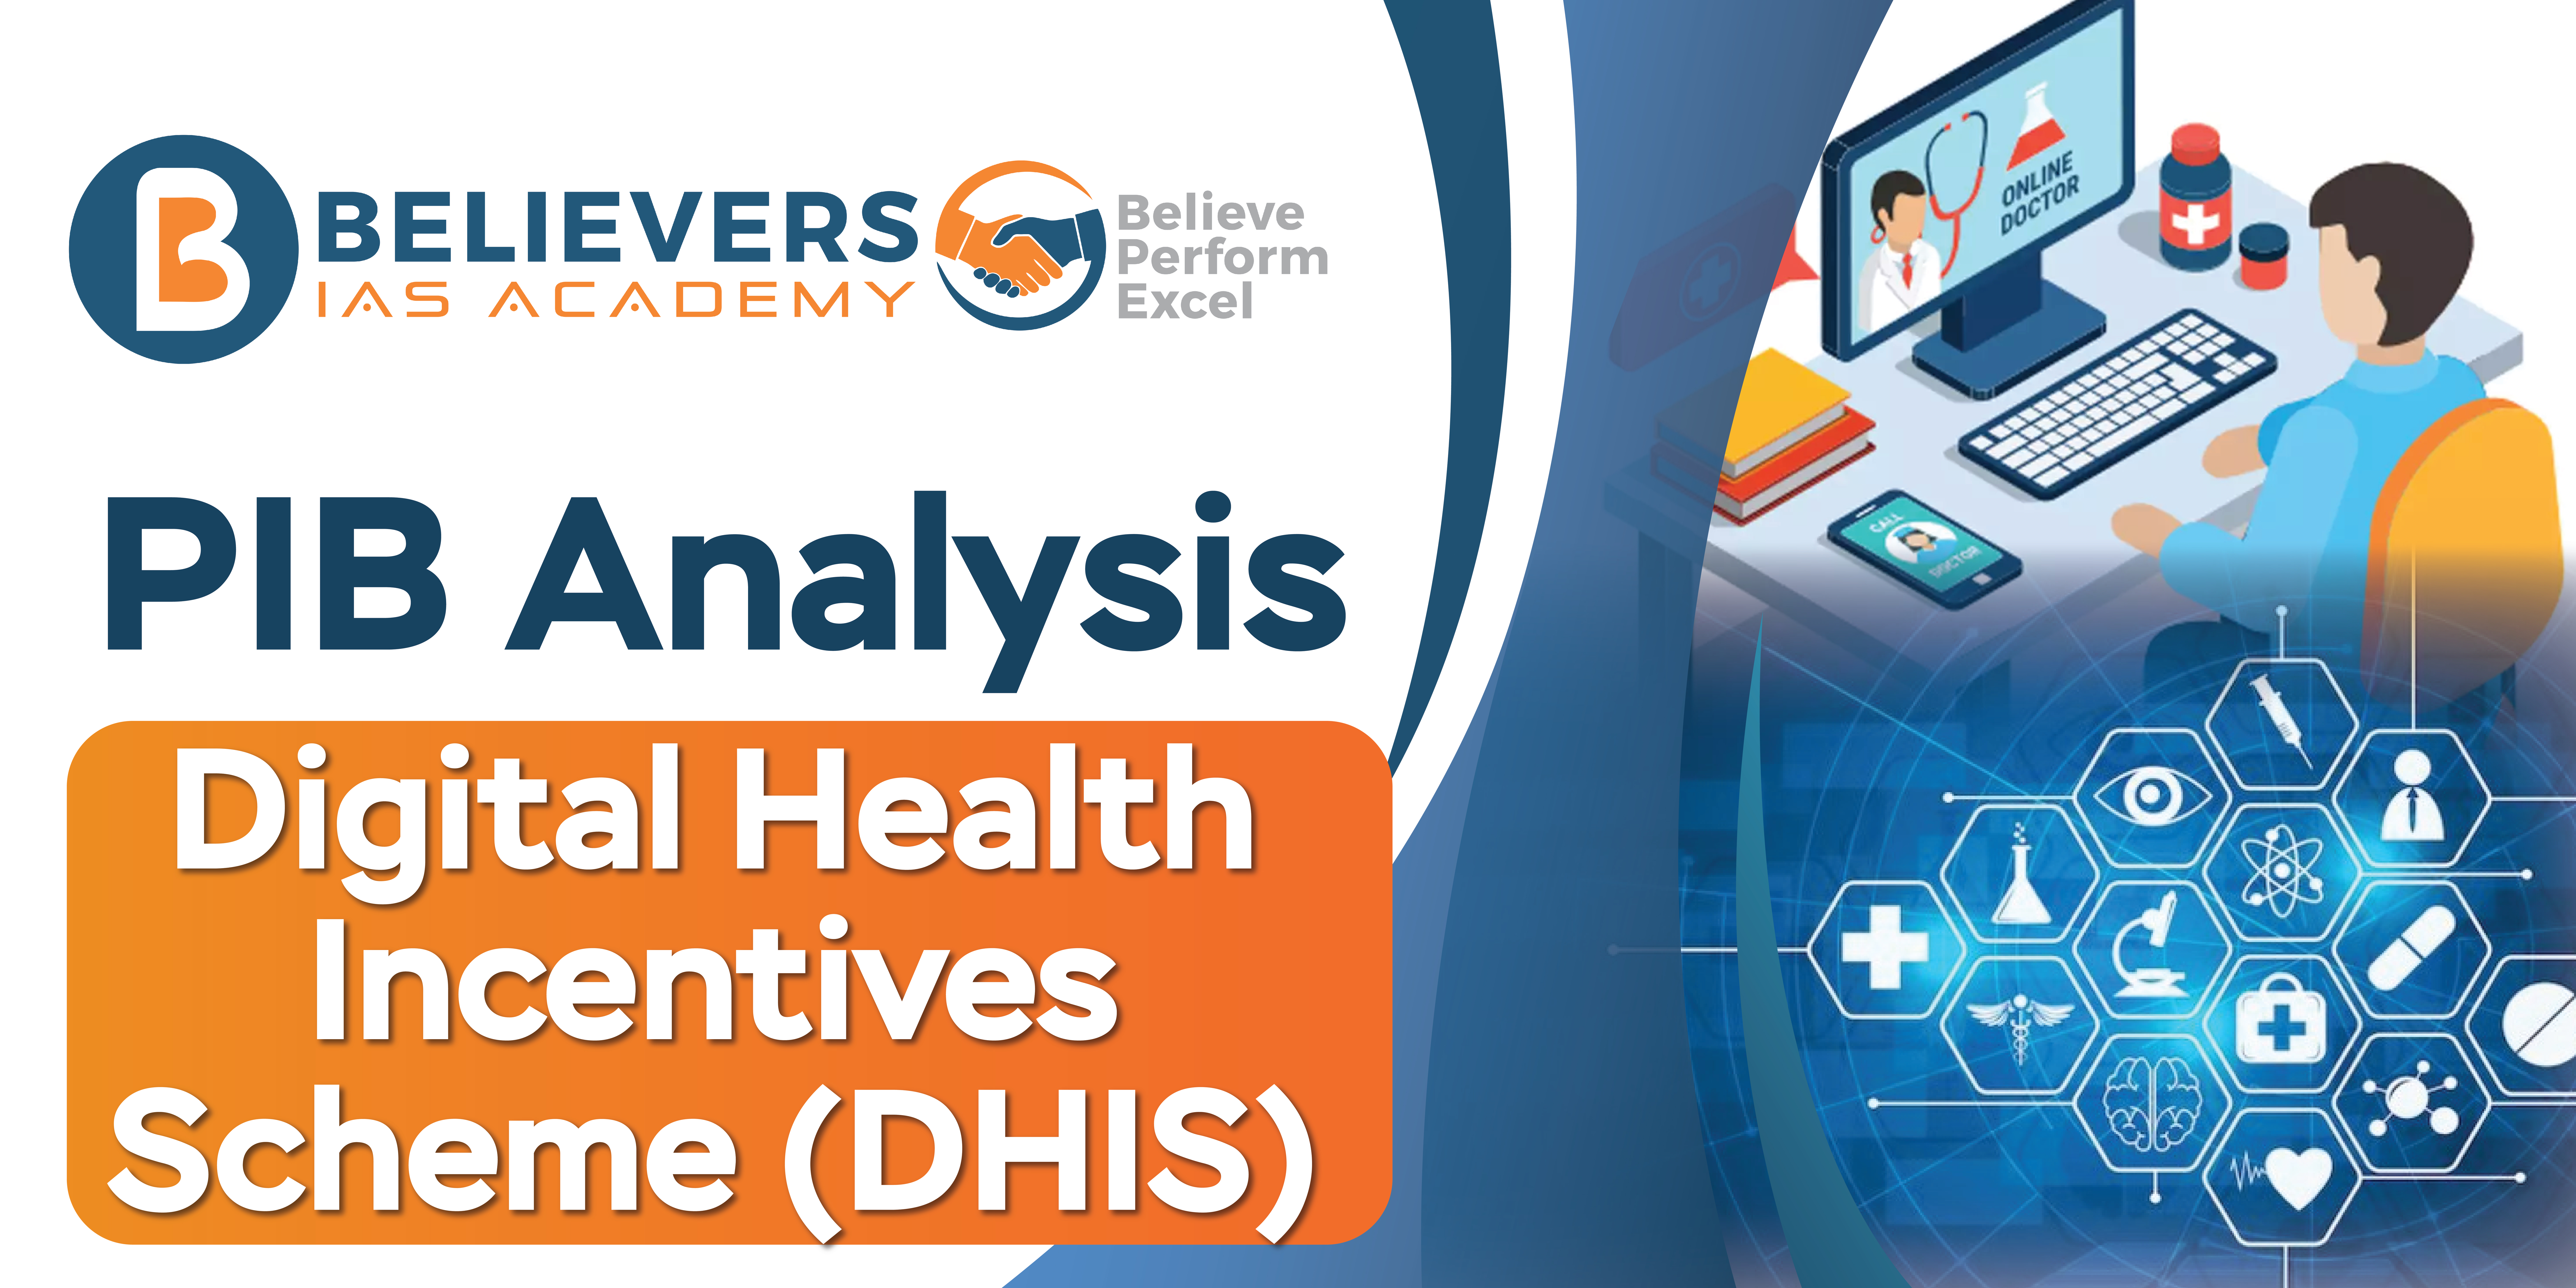 Digital Health Incentives Scheme (DHIS)